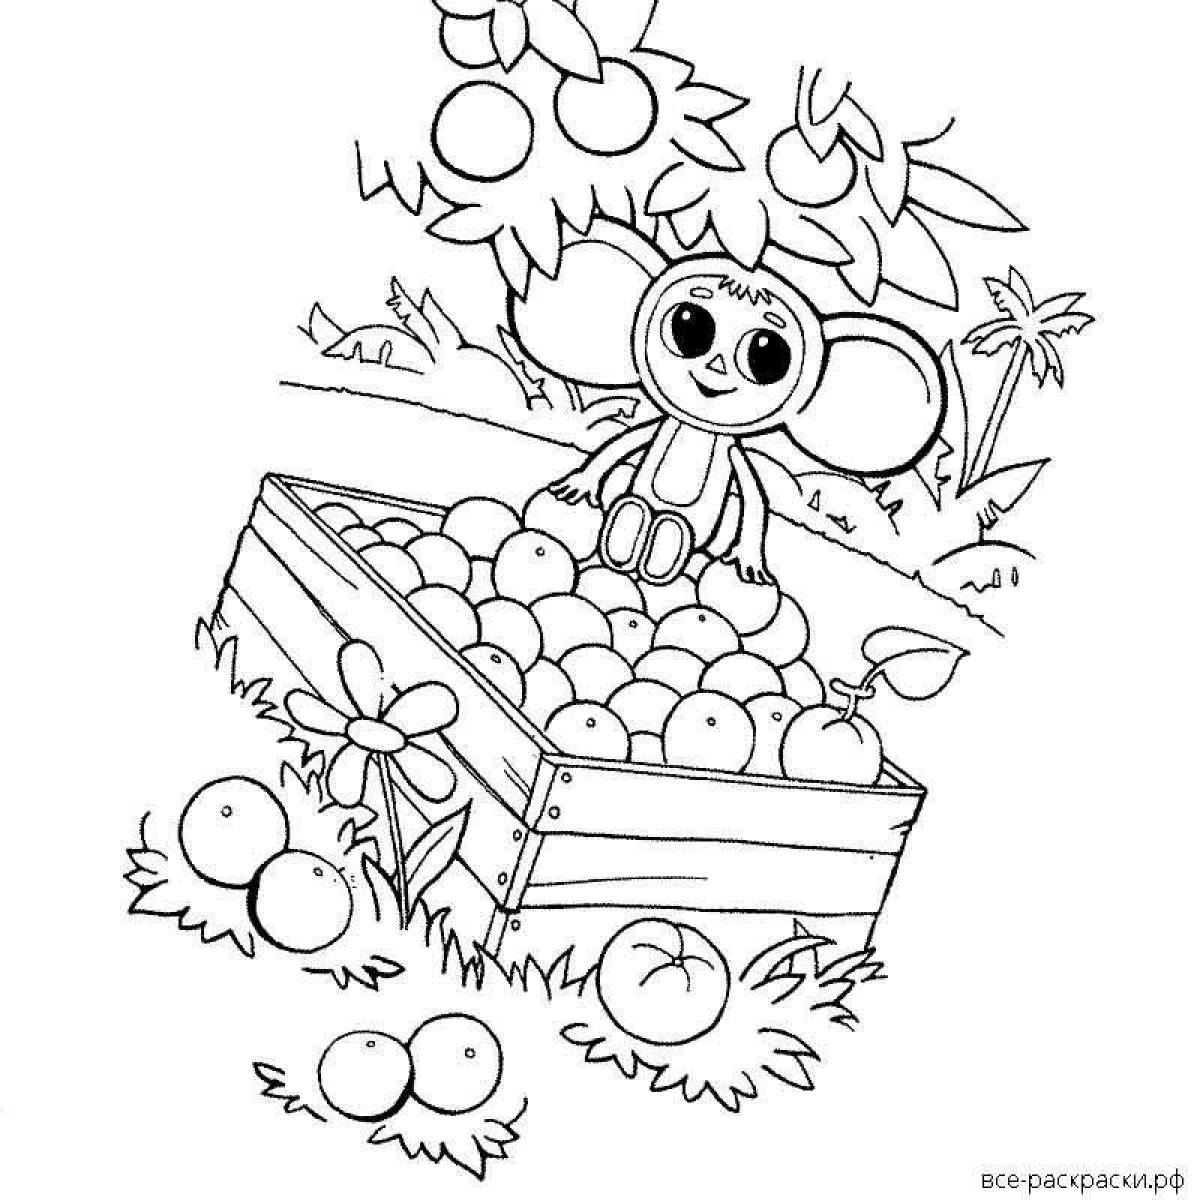 Charming cheburashka coloring book